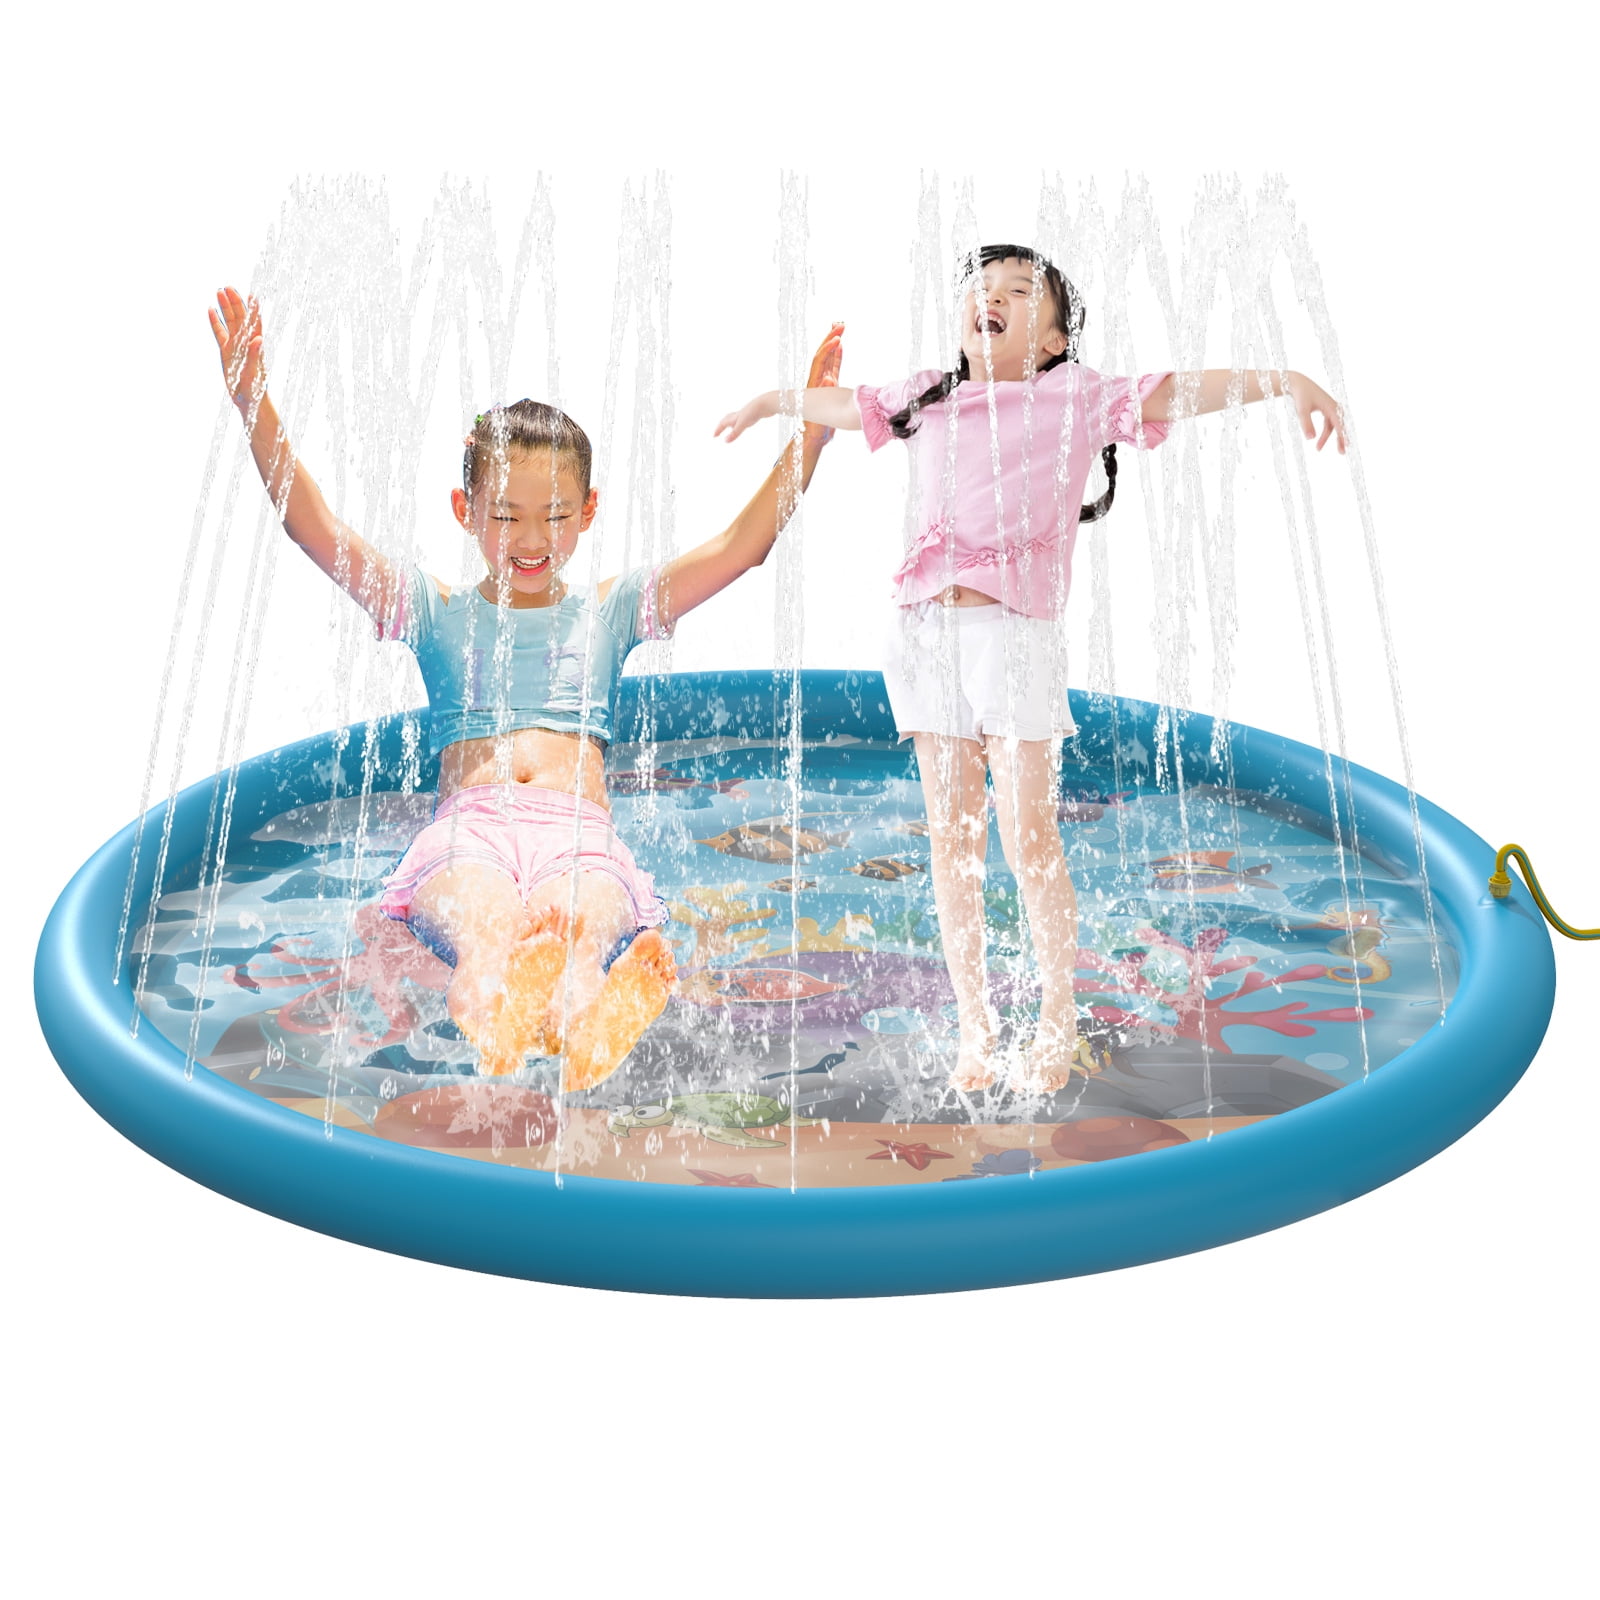 170cm Inflatable Sprinkler Splash Pad Play Mat Water Toys Swimming Pool for Kids 